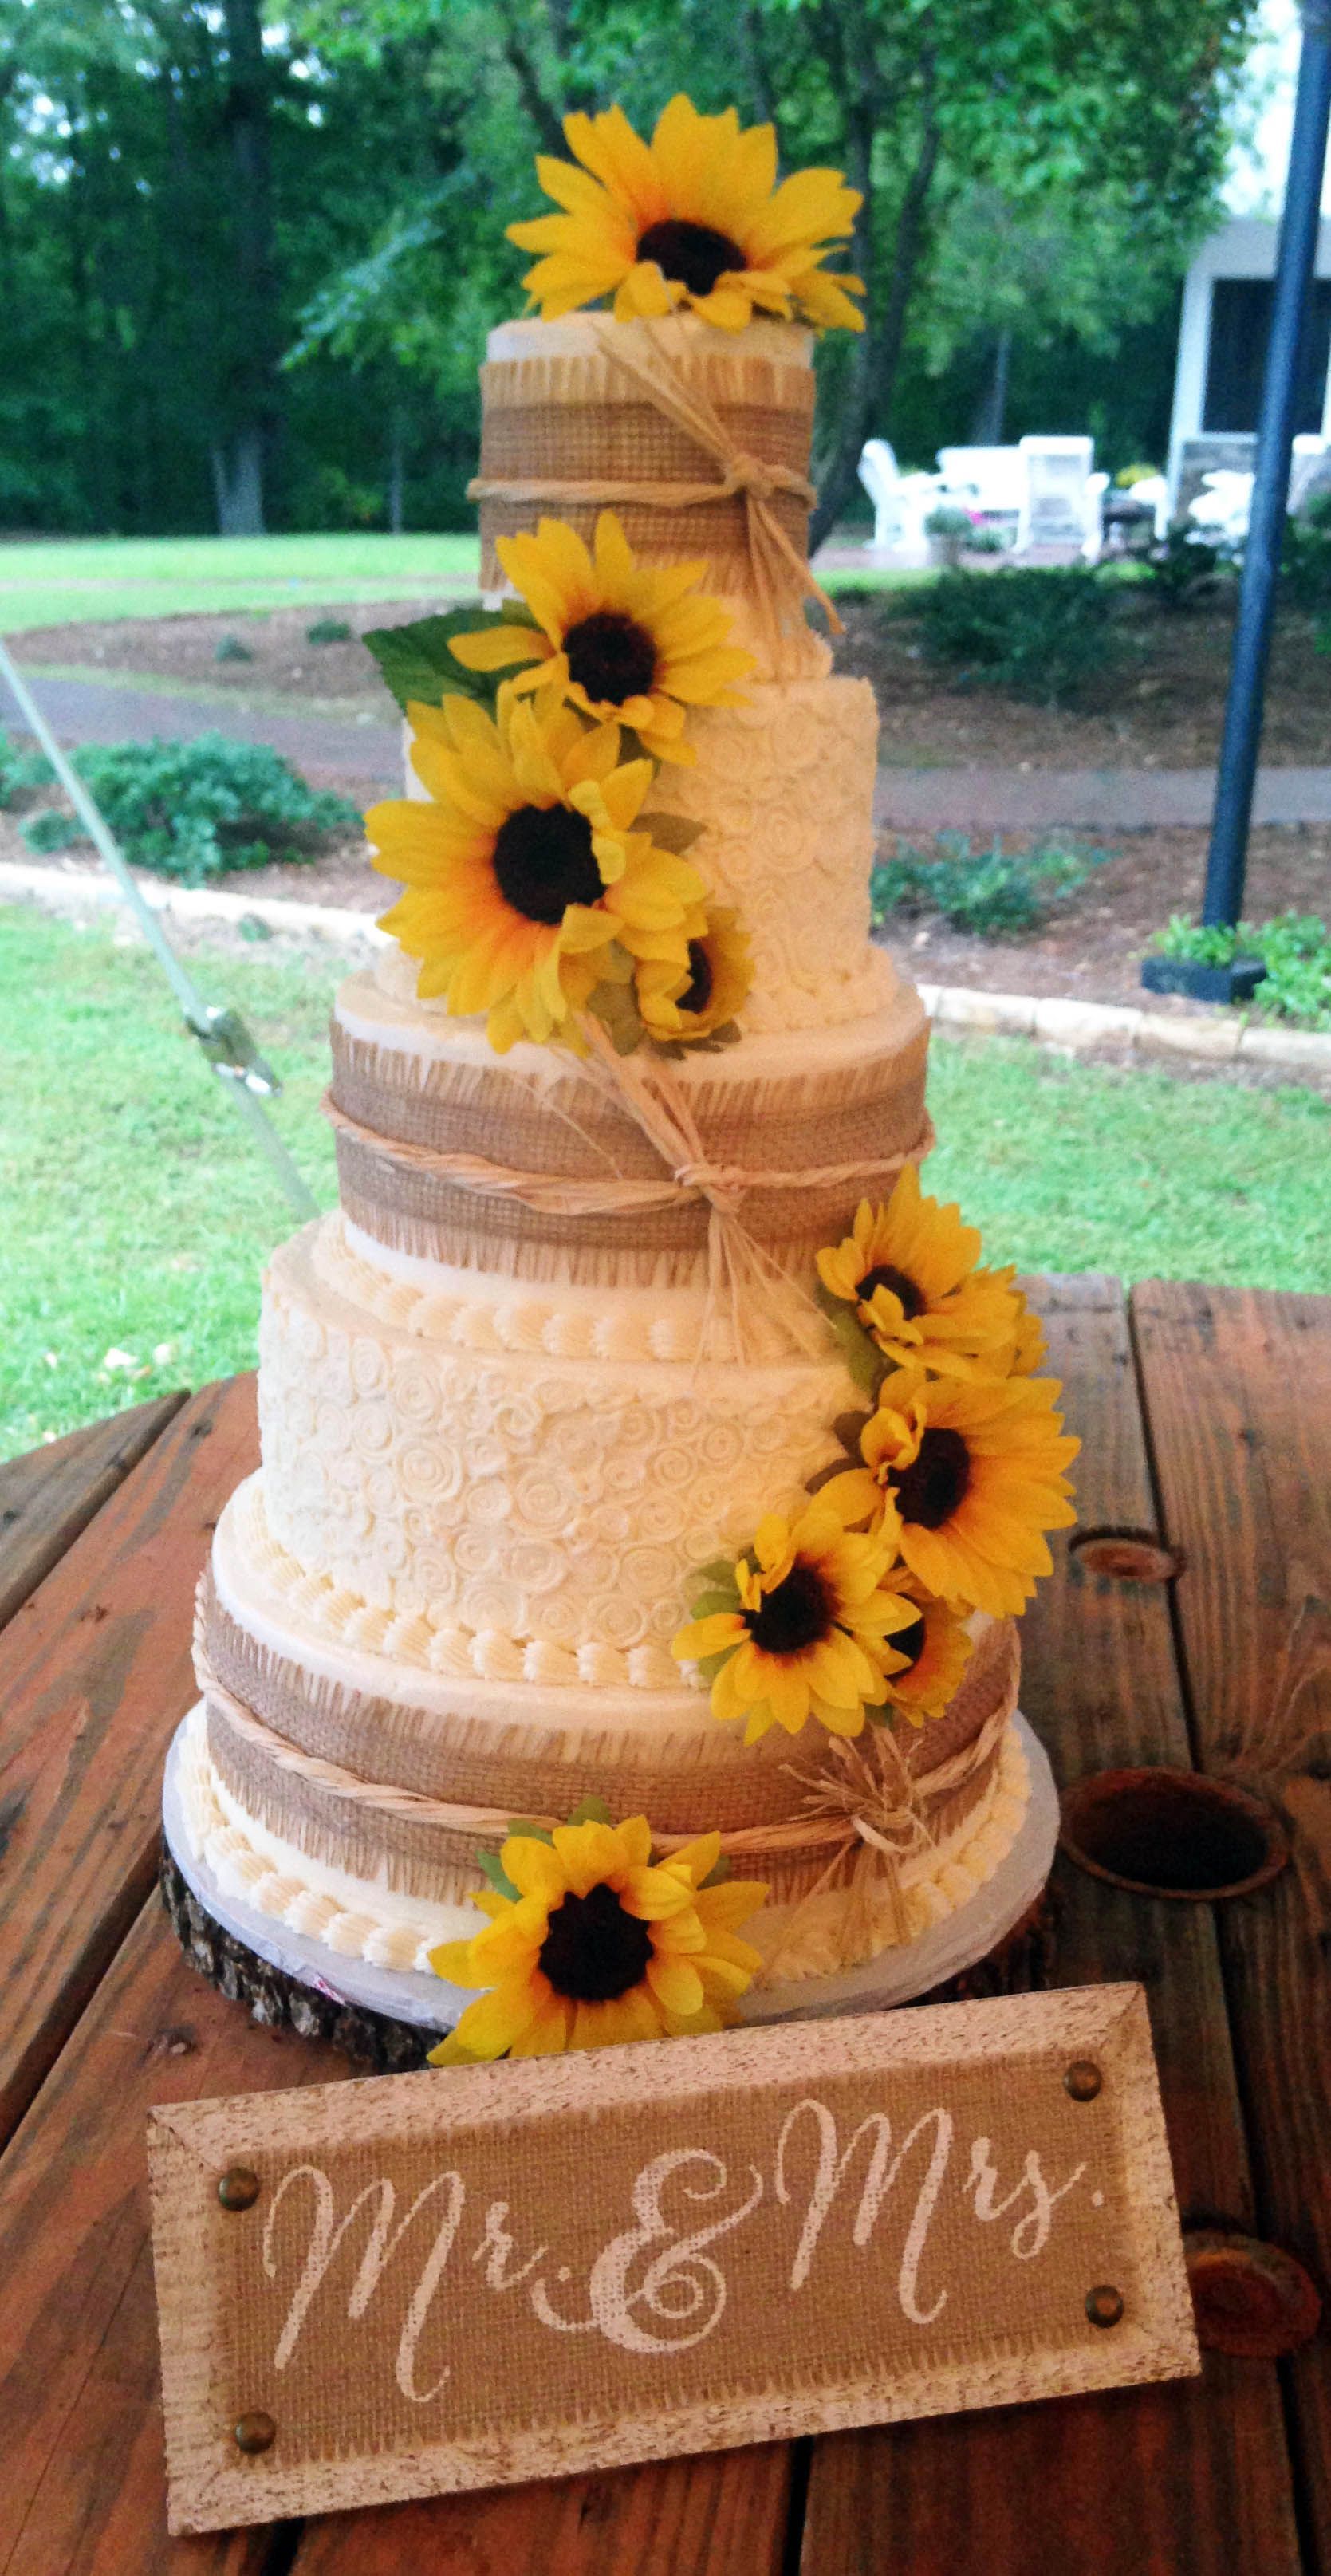 Dreamy Rustic Wedding Cake Ideas Everyone Loves